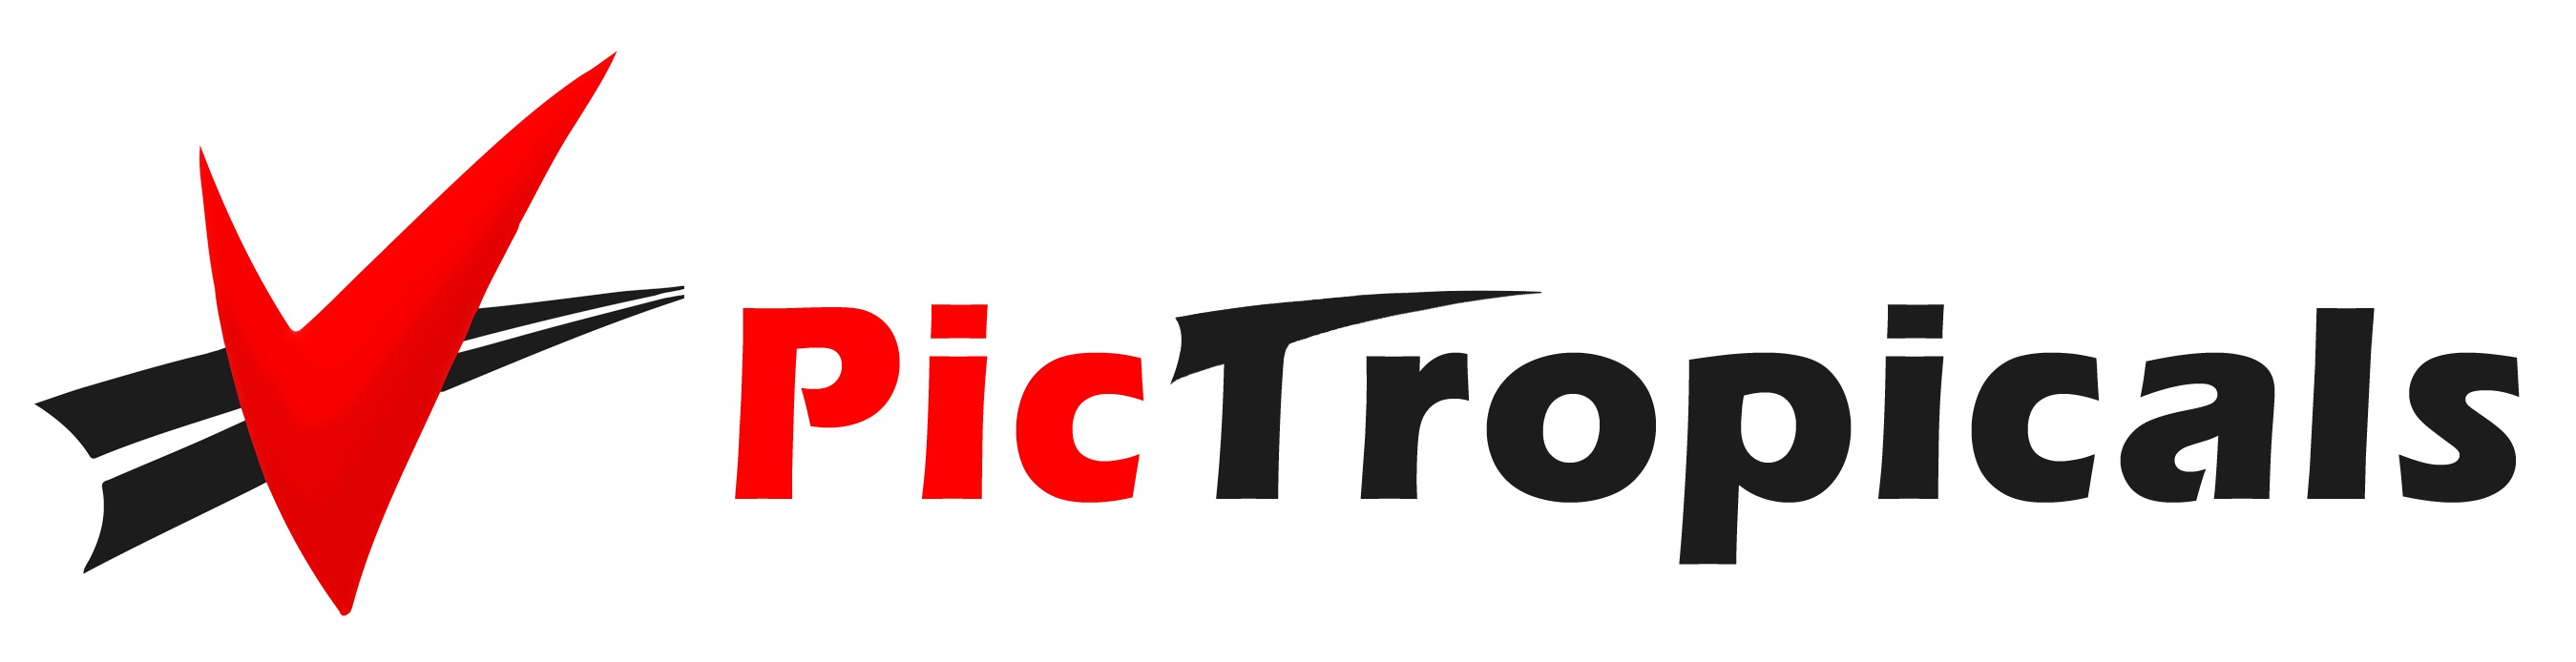 PicTropicals_Logo_NonTransparent_Horizontal.jpg